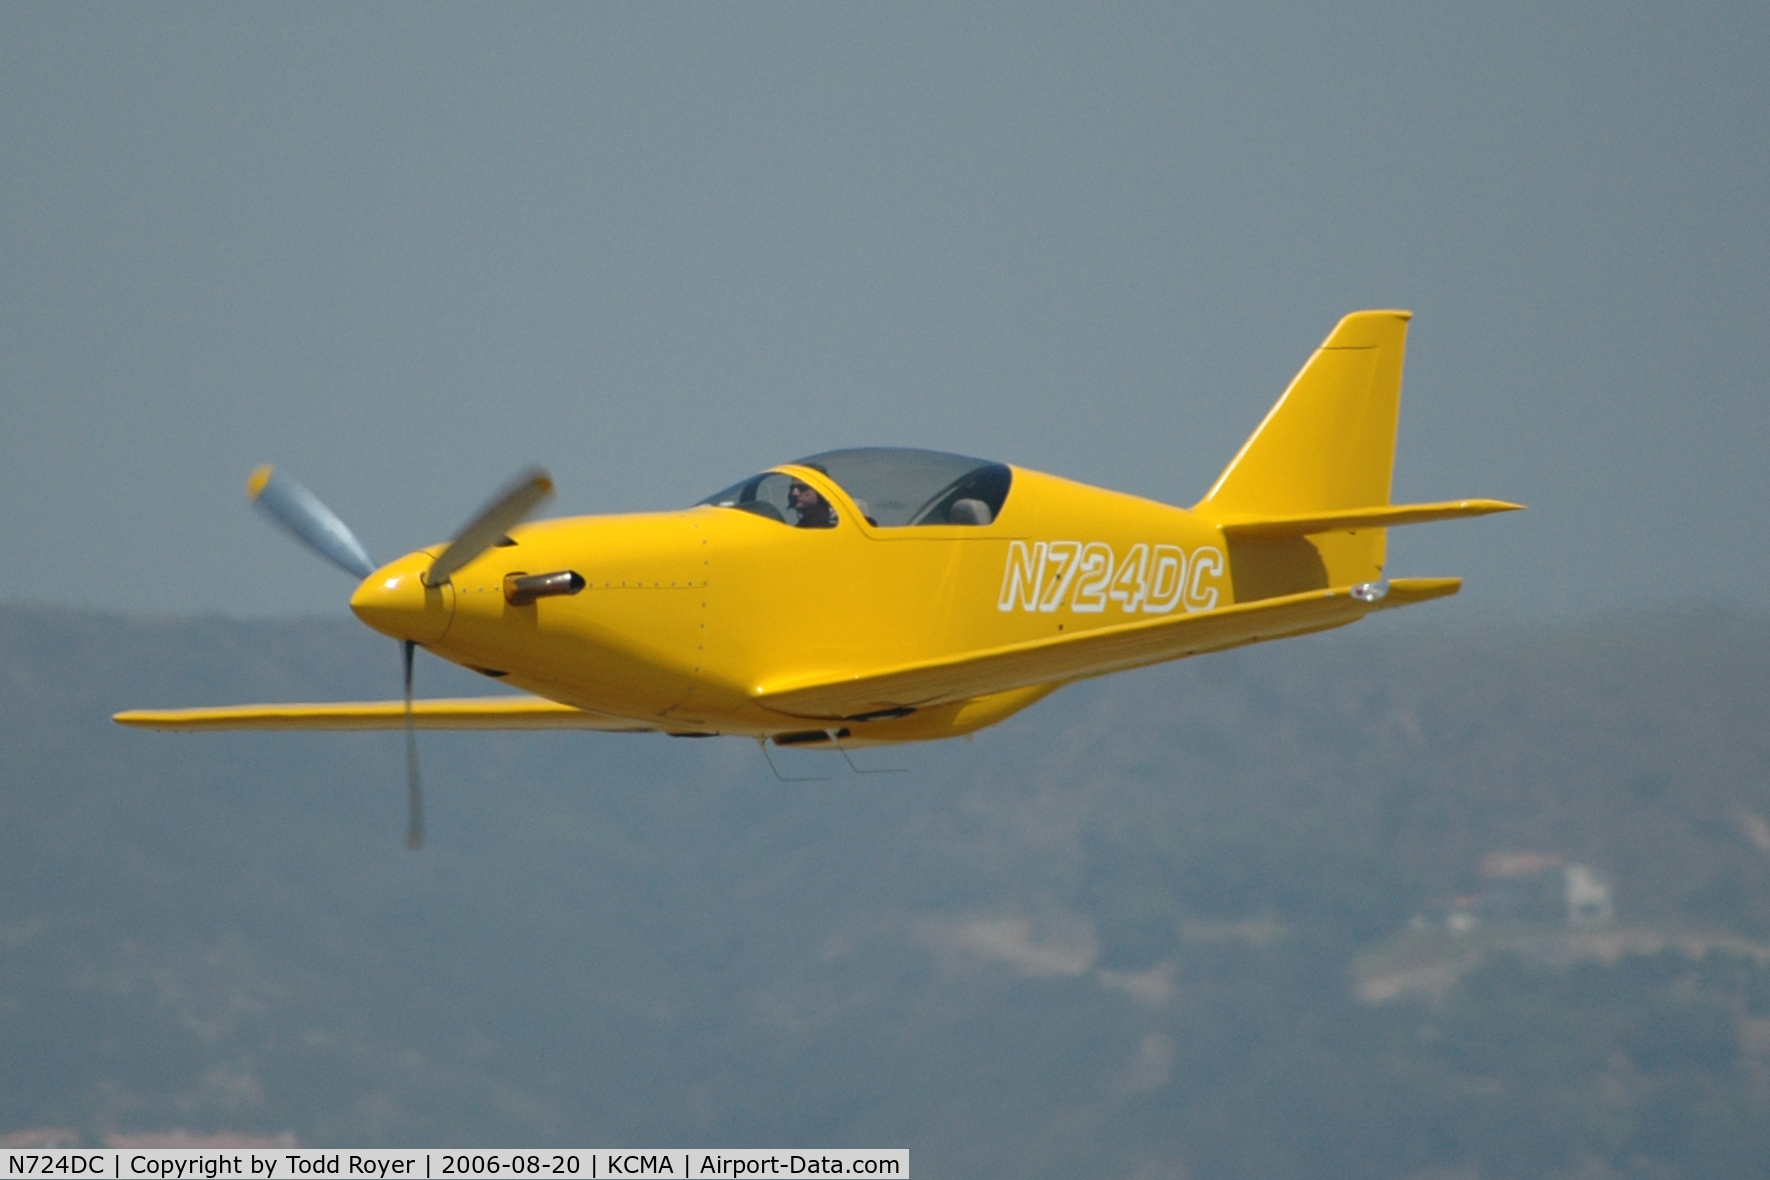 N724DC, 2005 Legend Aircraft Legend C/N 02, Camarillo Airshow 2006